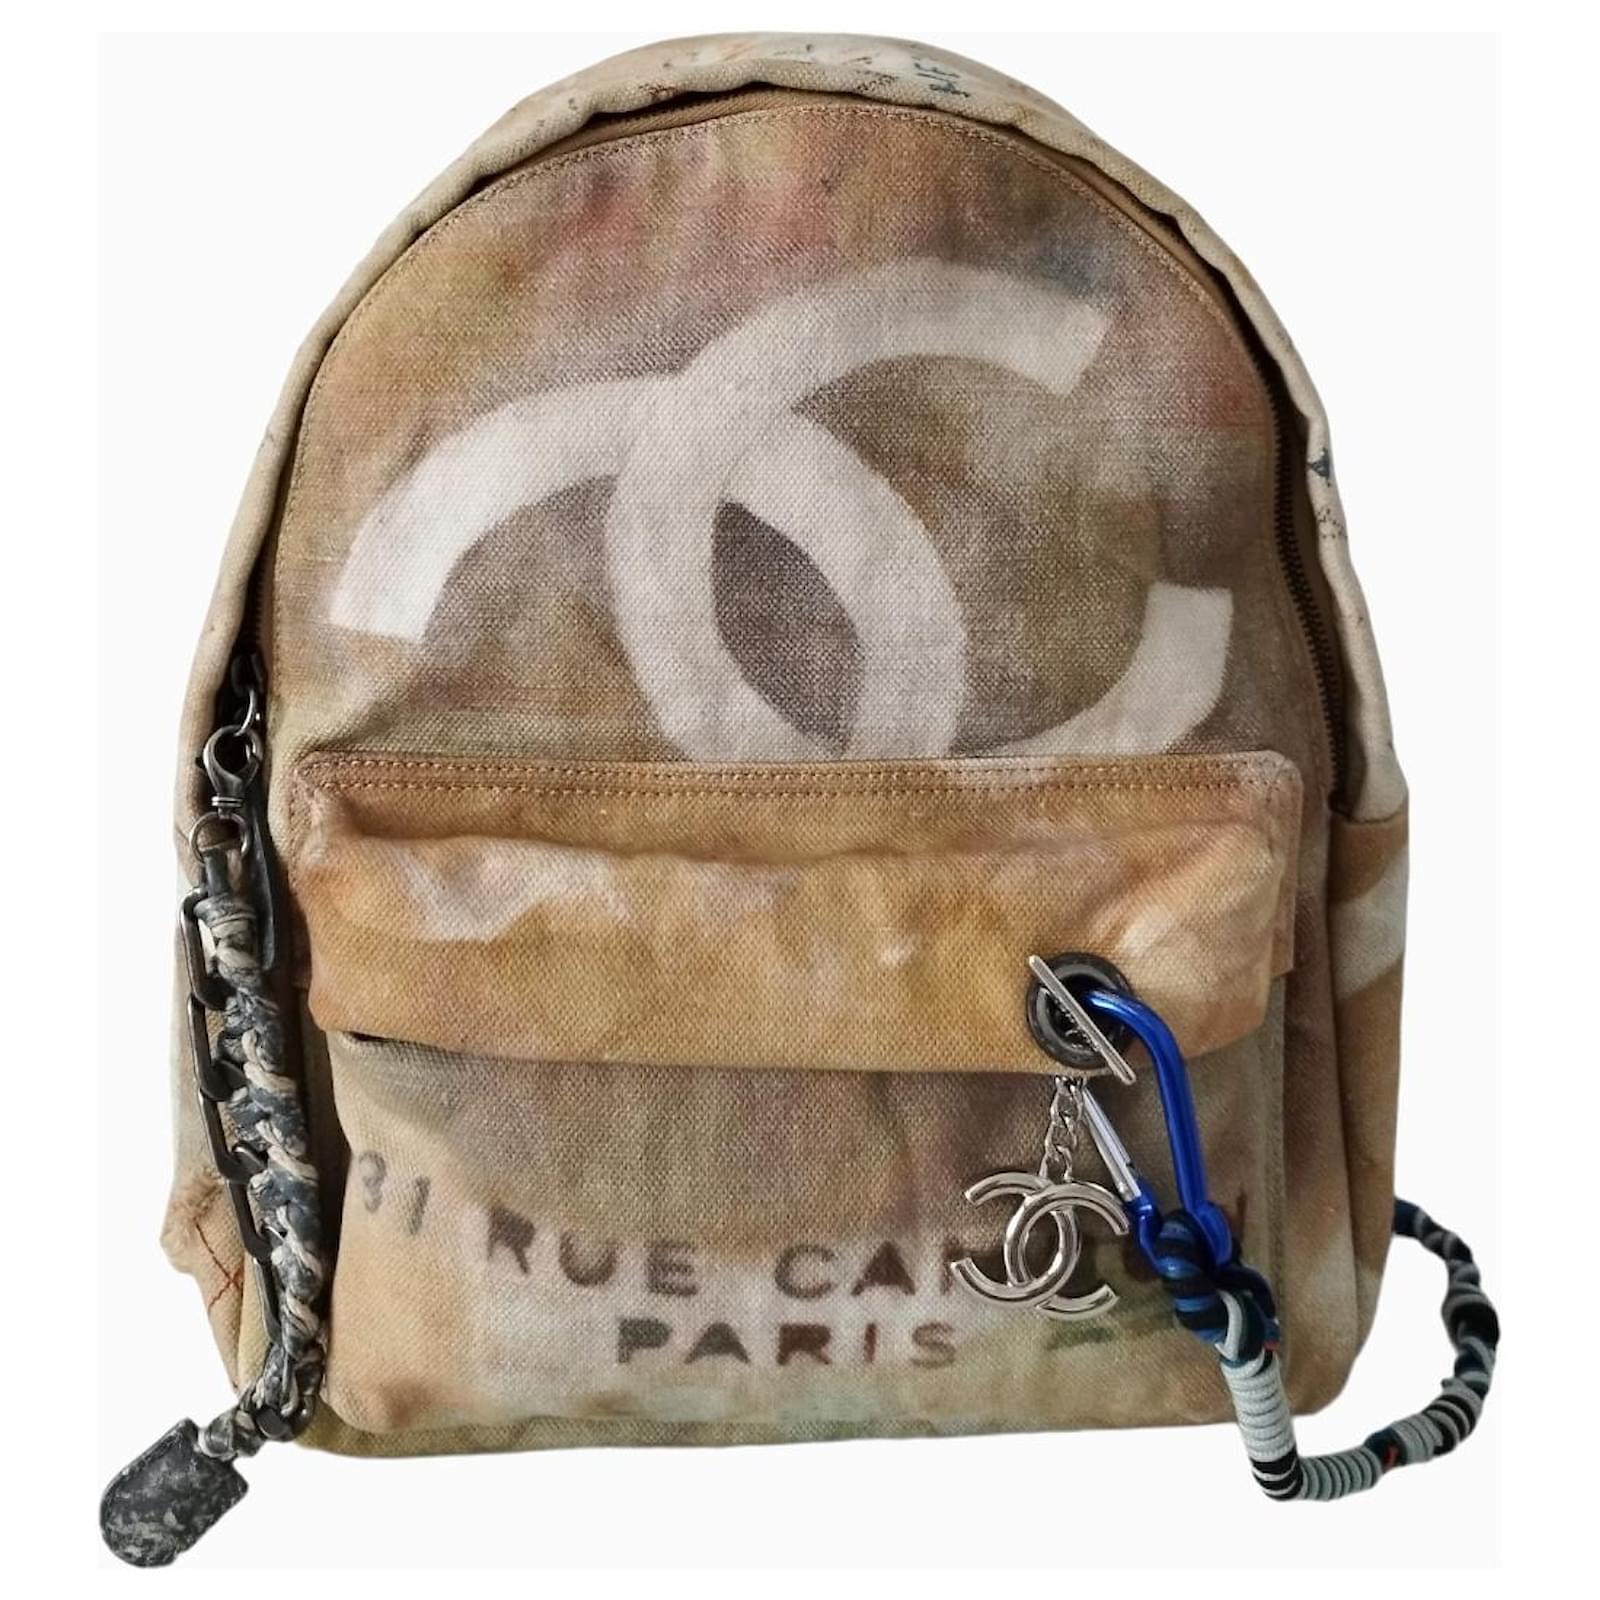 Handbags Chanel Chanel 2014 Art School Grey Multi Canvas Backpack